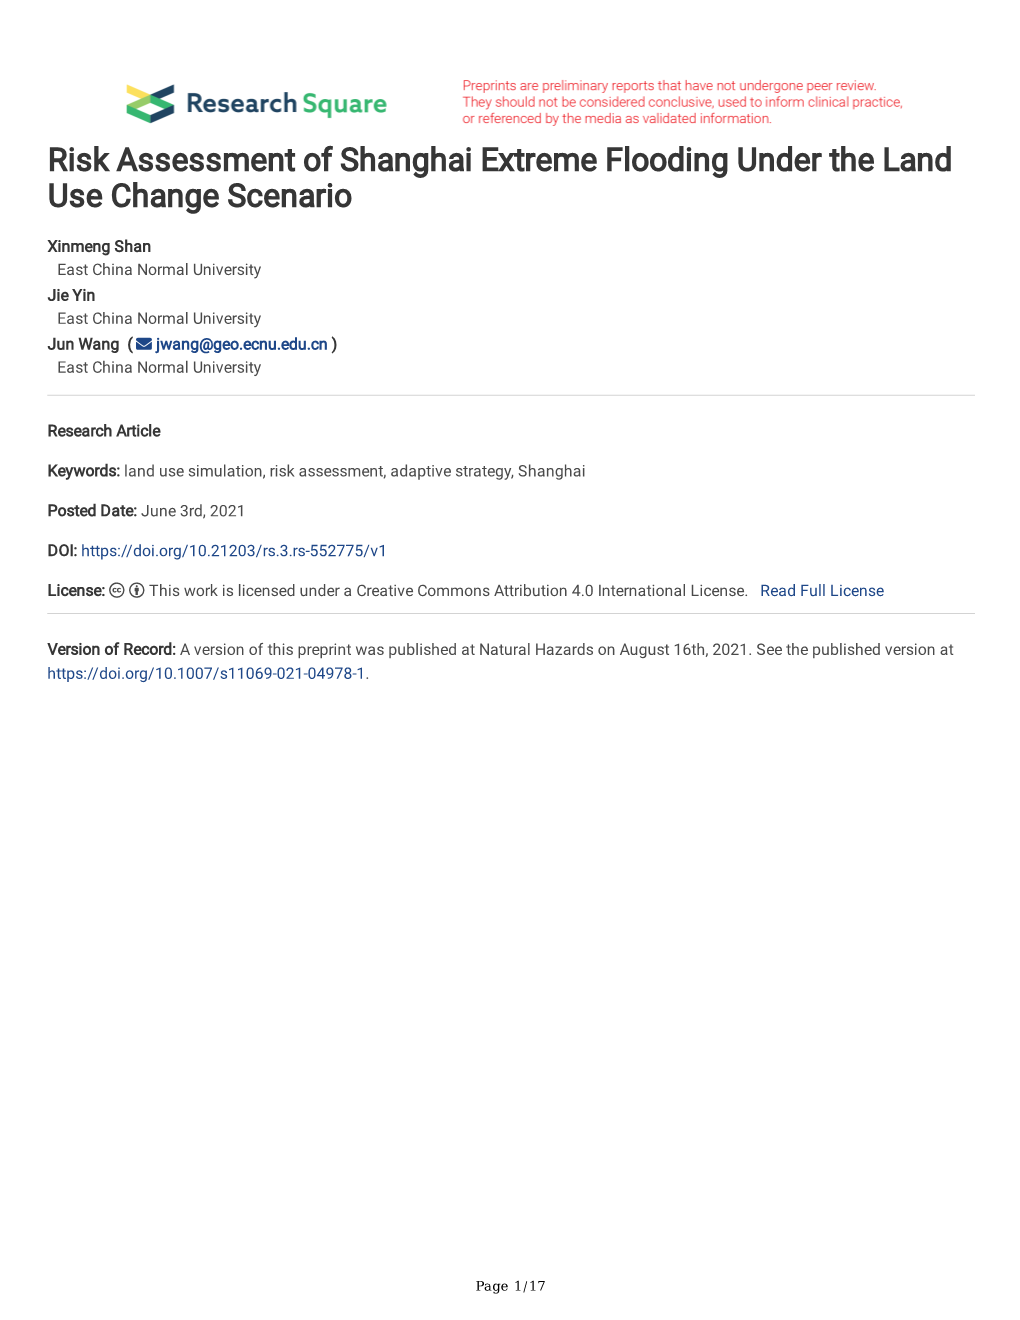 Risk Assessment of Shanghai Extreme Flooding Under the Land Use Change Scenario